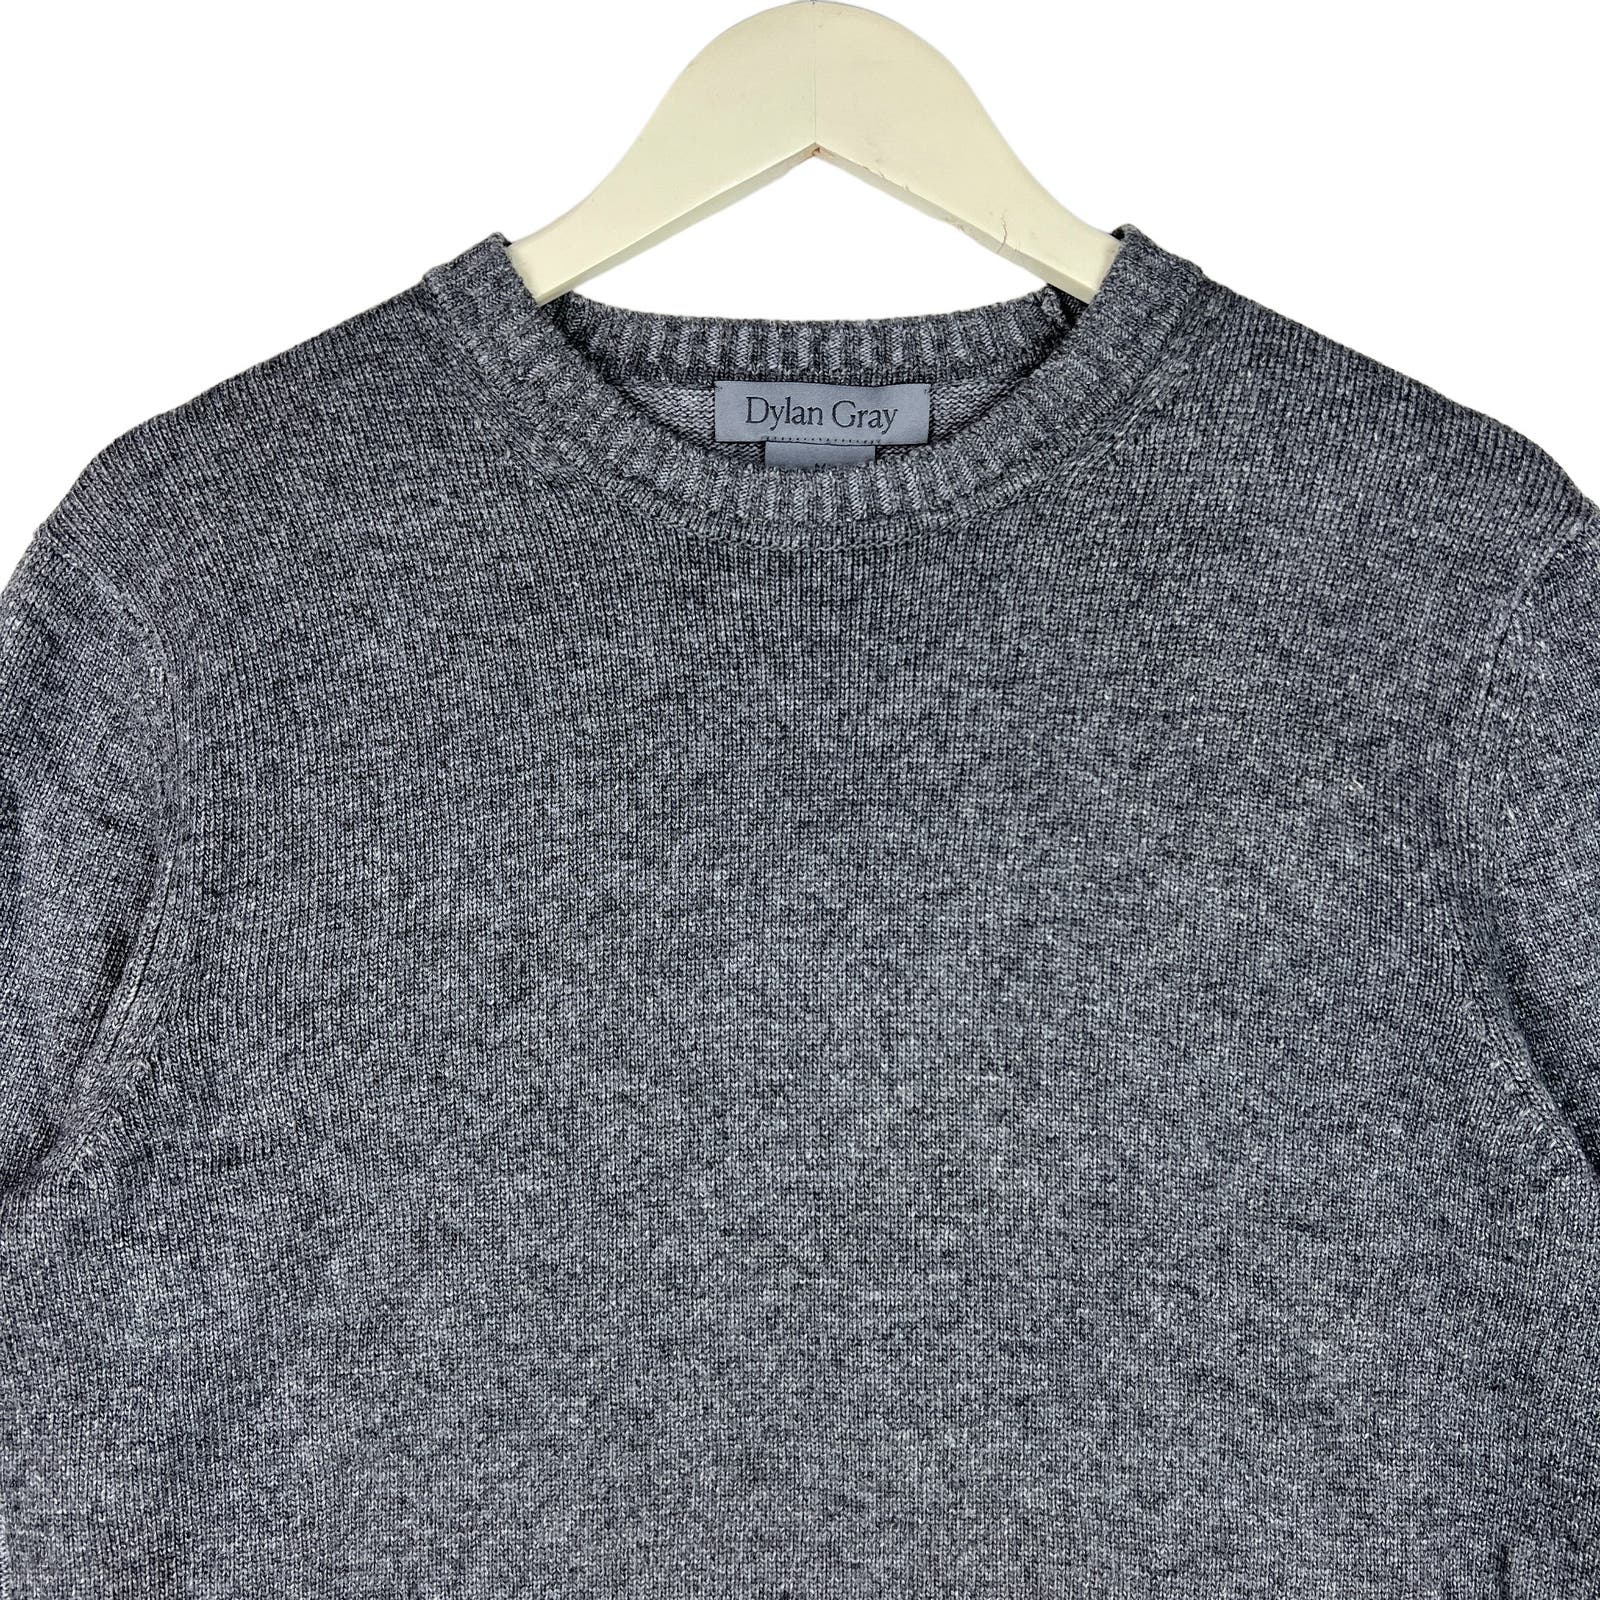 Dylan Gray Men Crewneck Wool US L Cashmere Sweatshirt